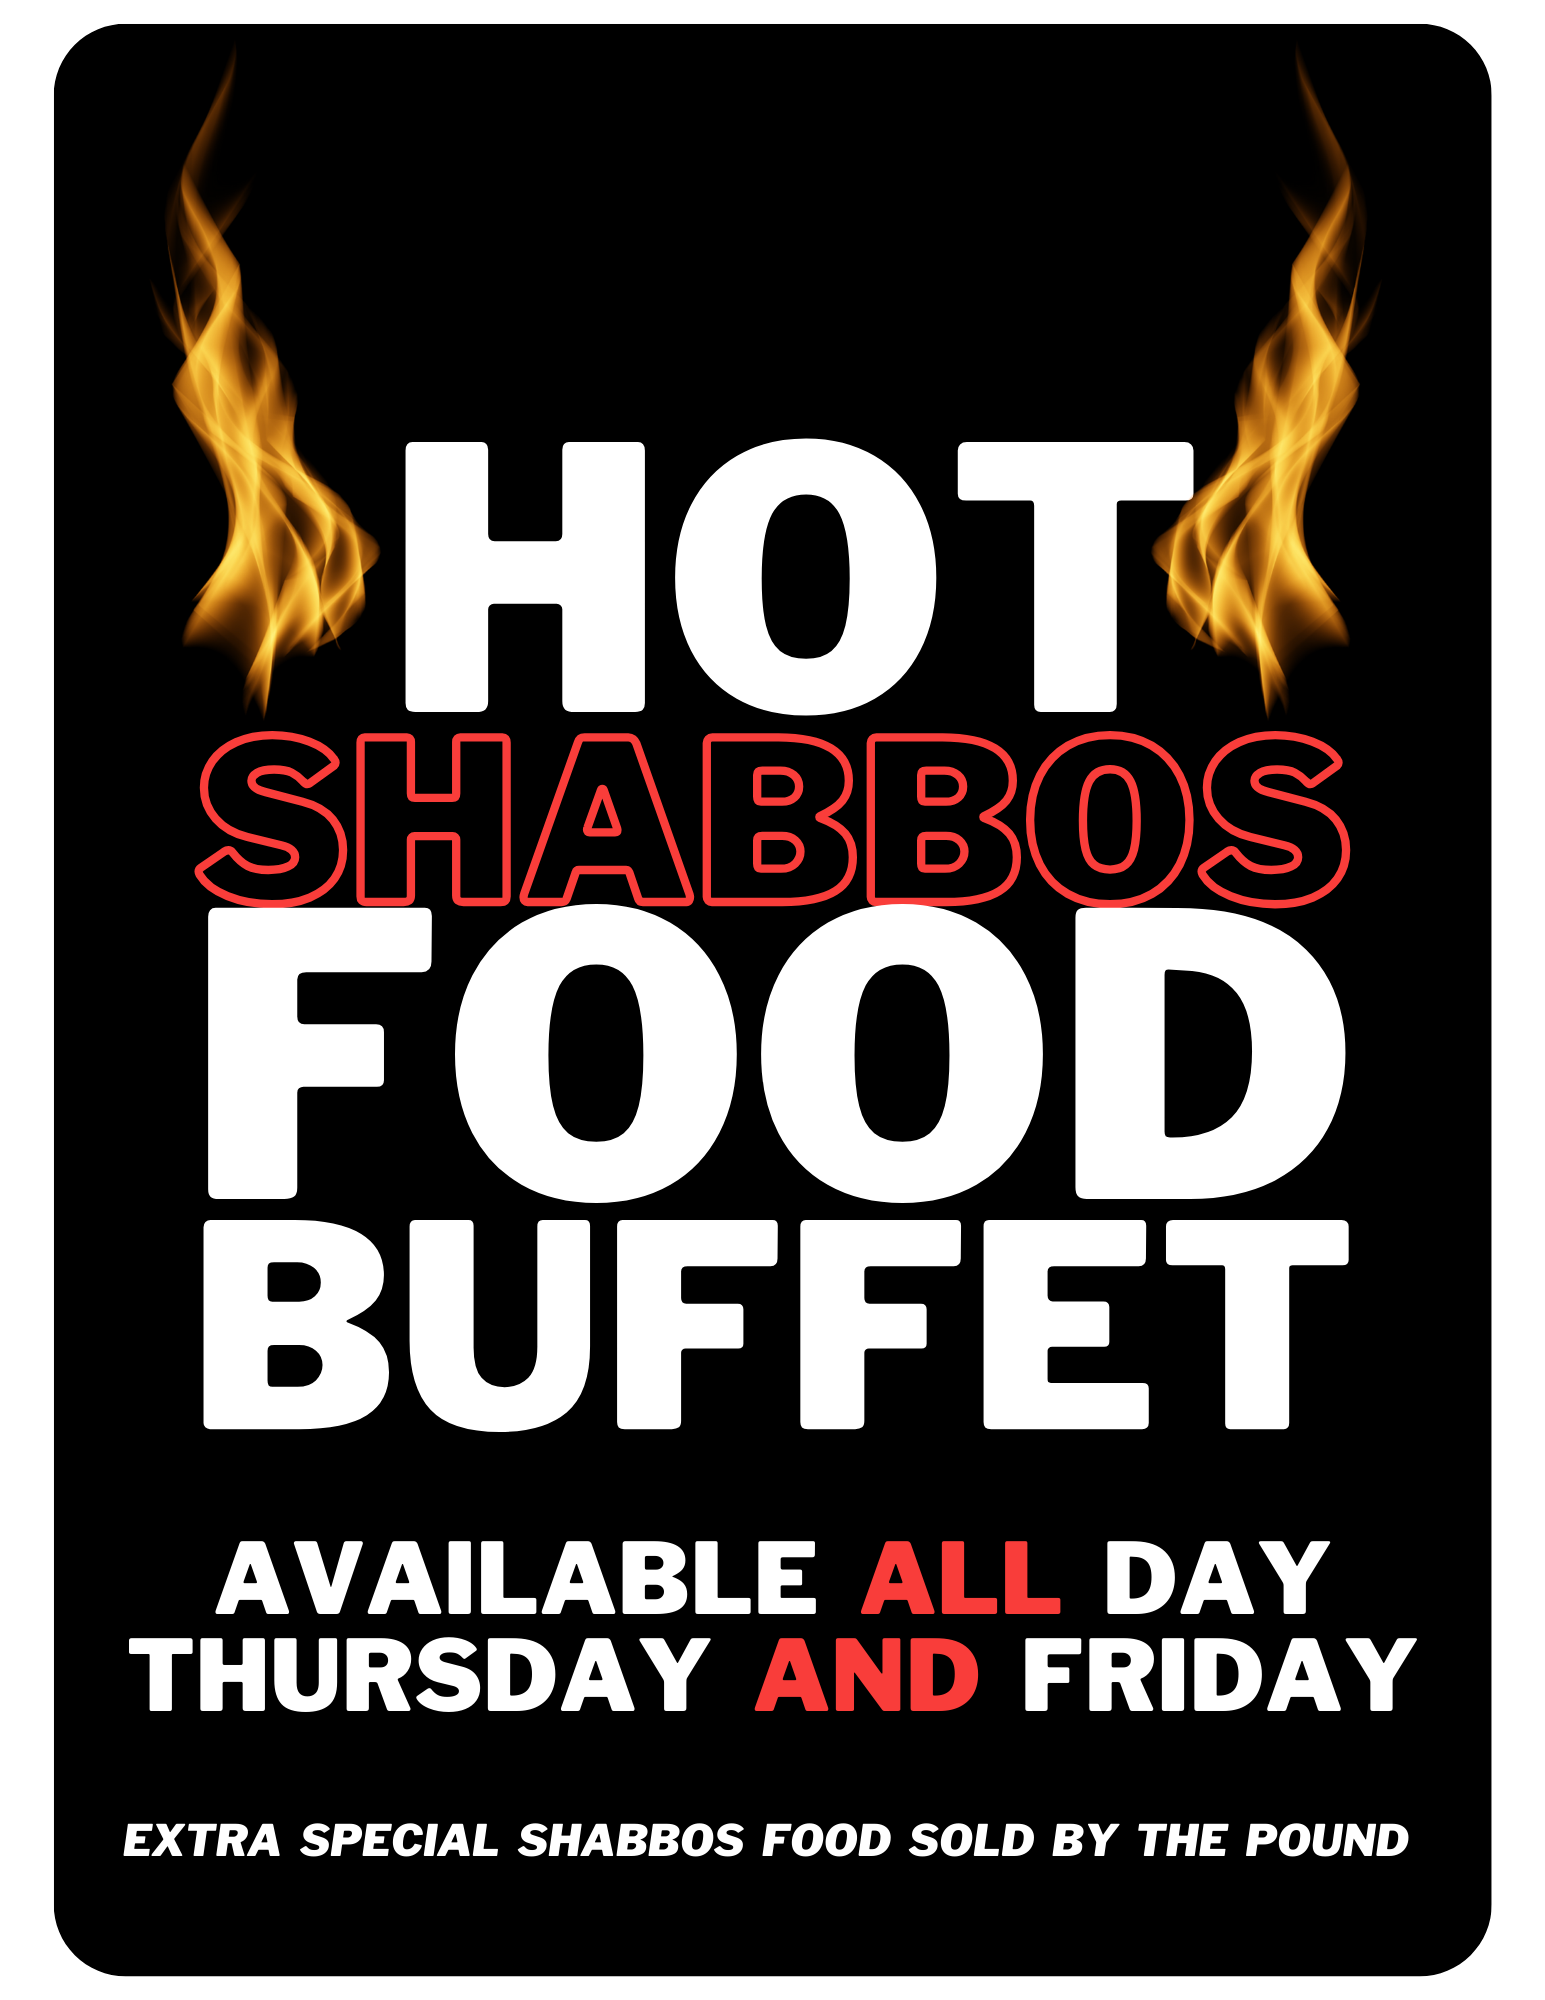 Hot Shabbat Food Buffet